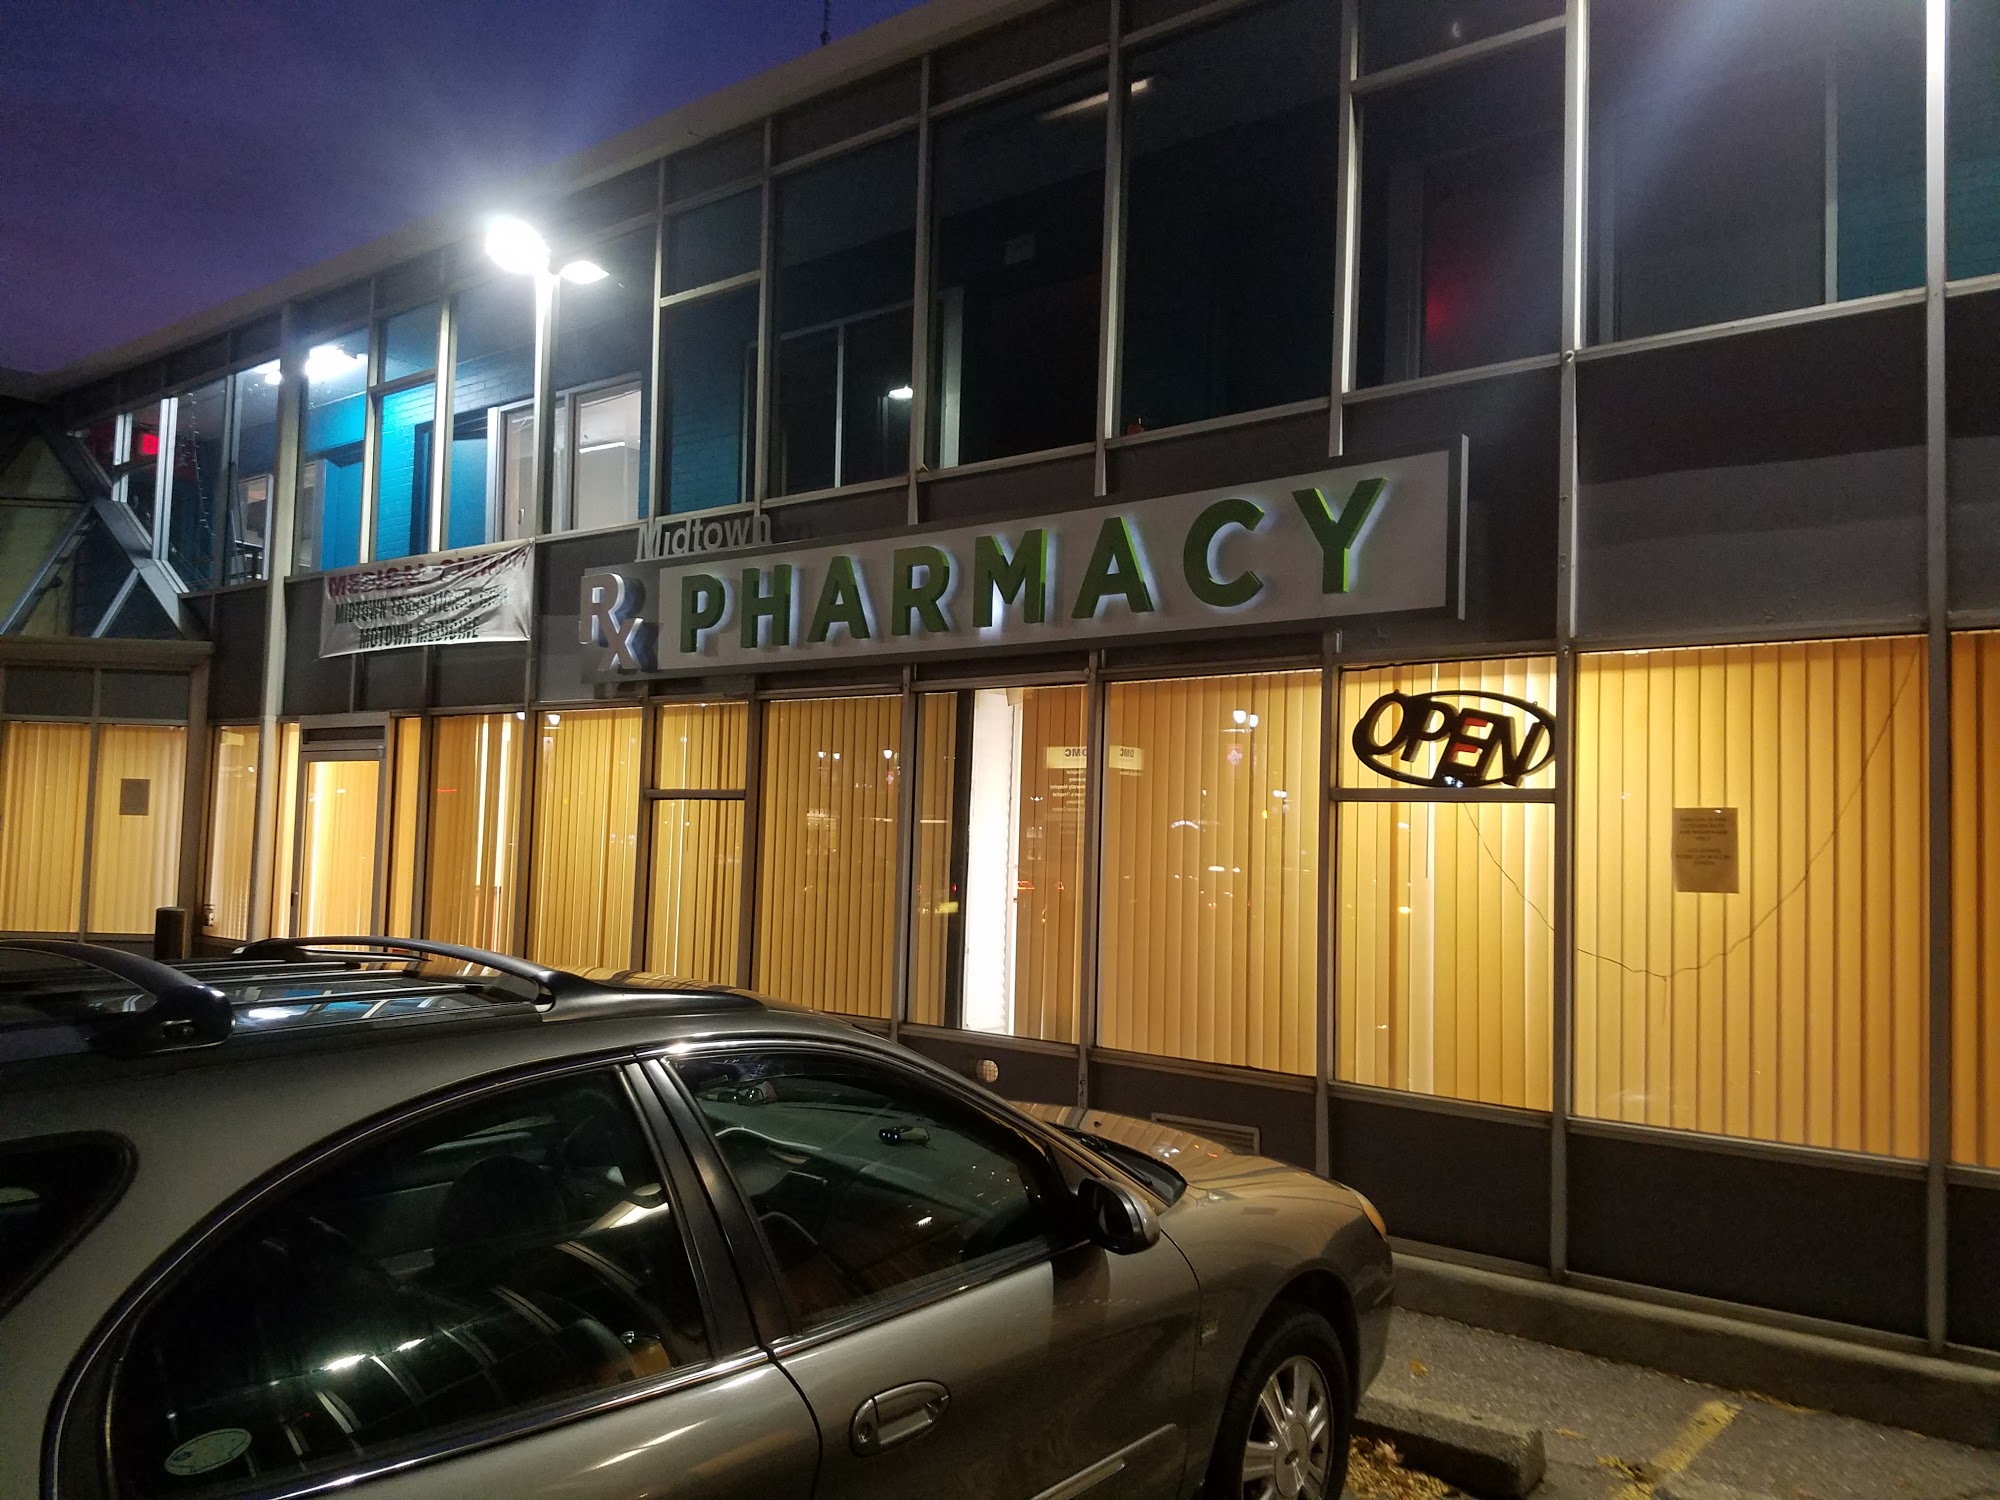 Midtown Rx Pharmacy